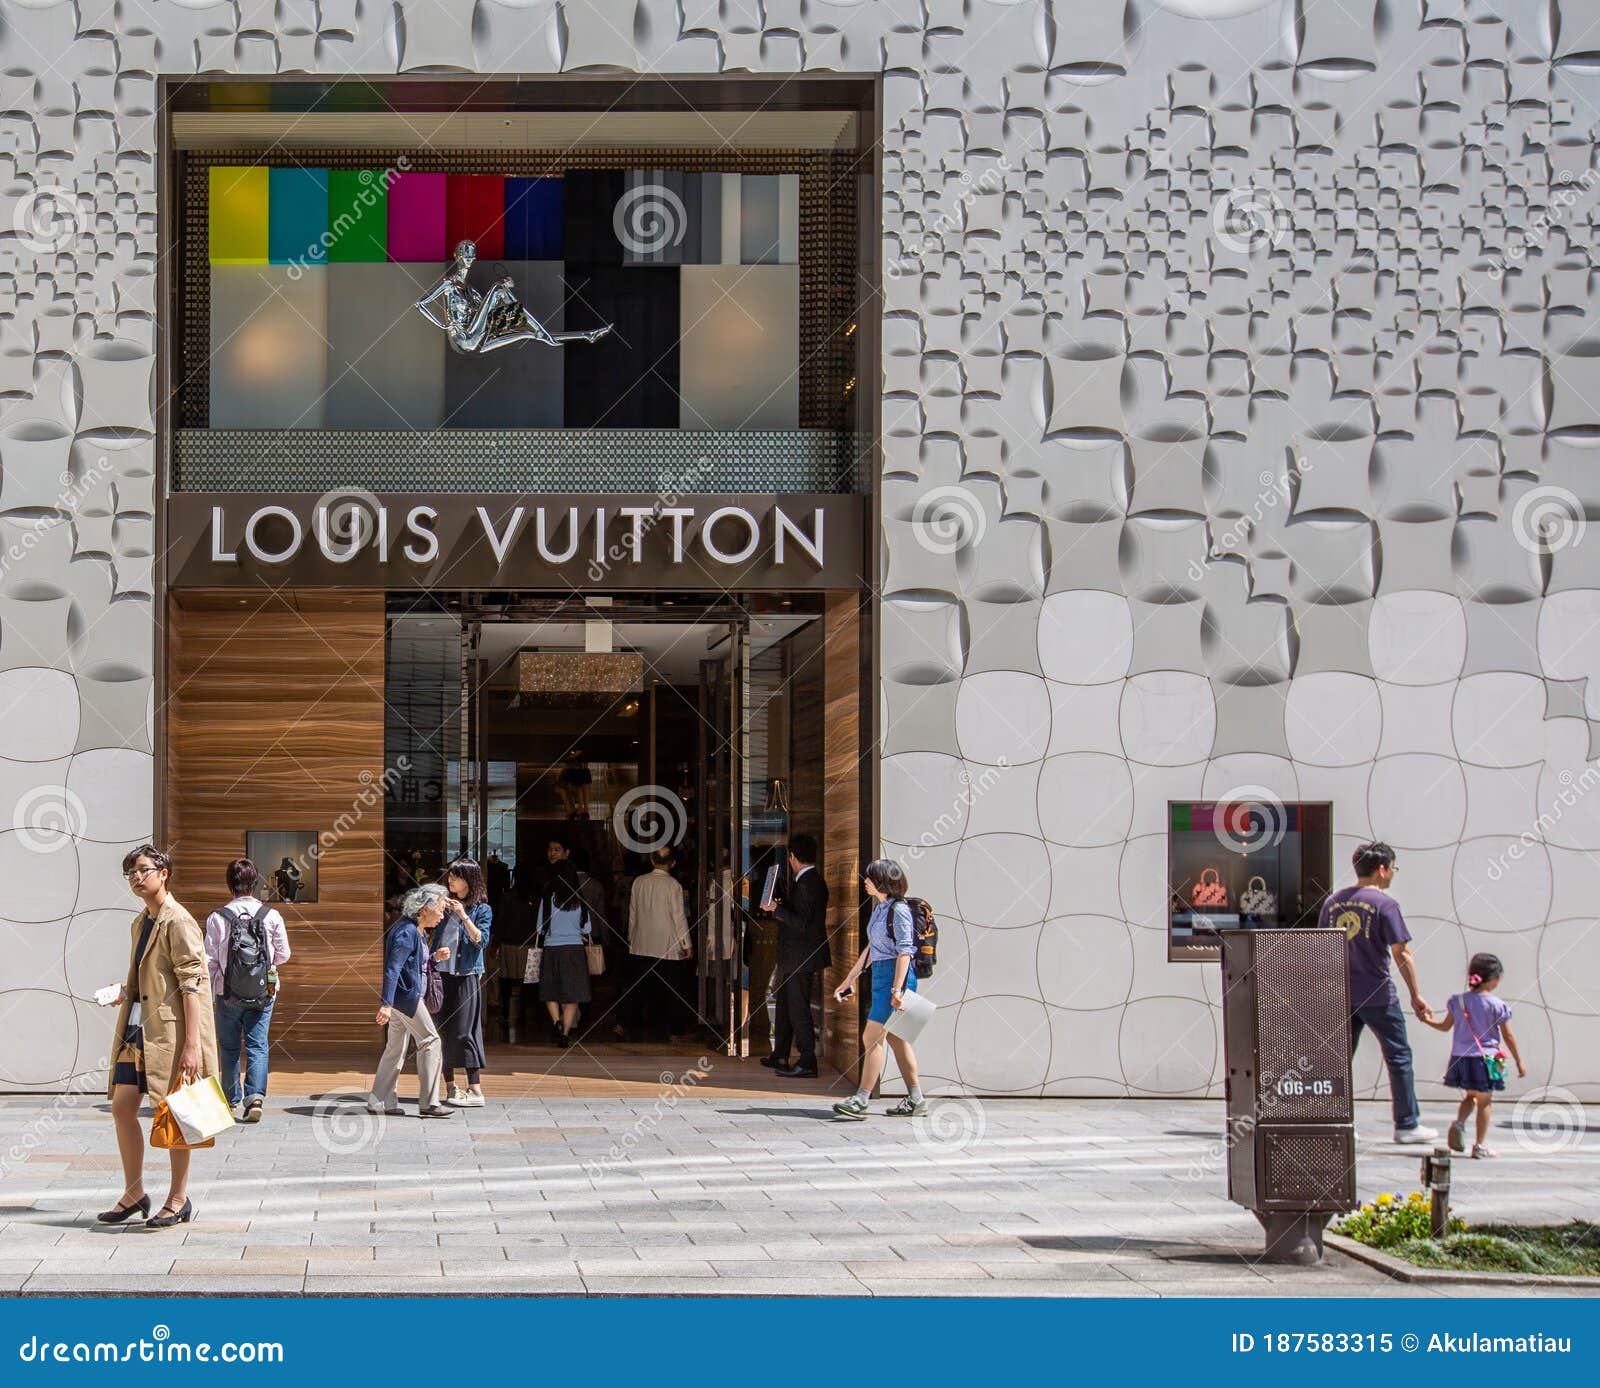 Louis Vuitton Store Exterior